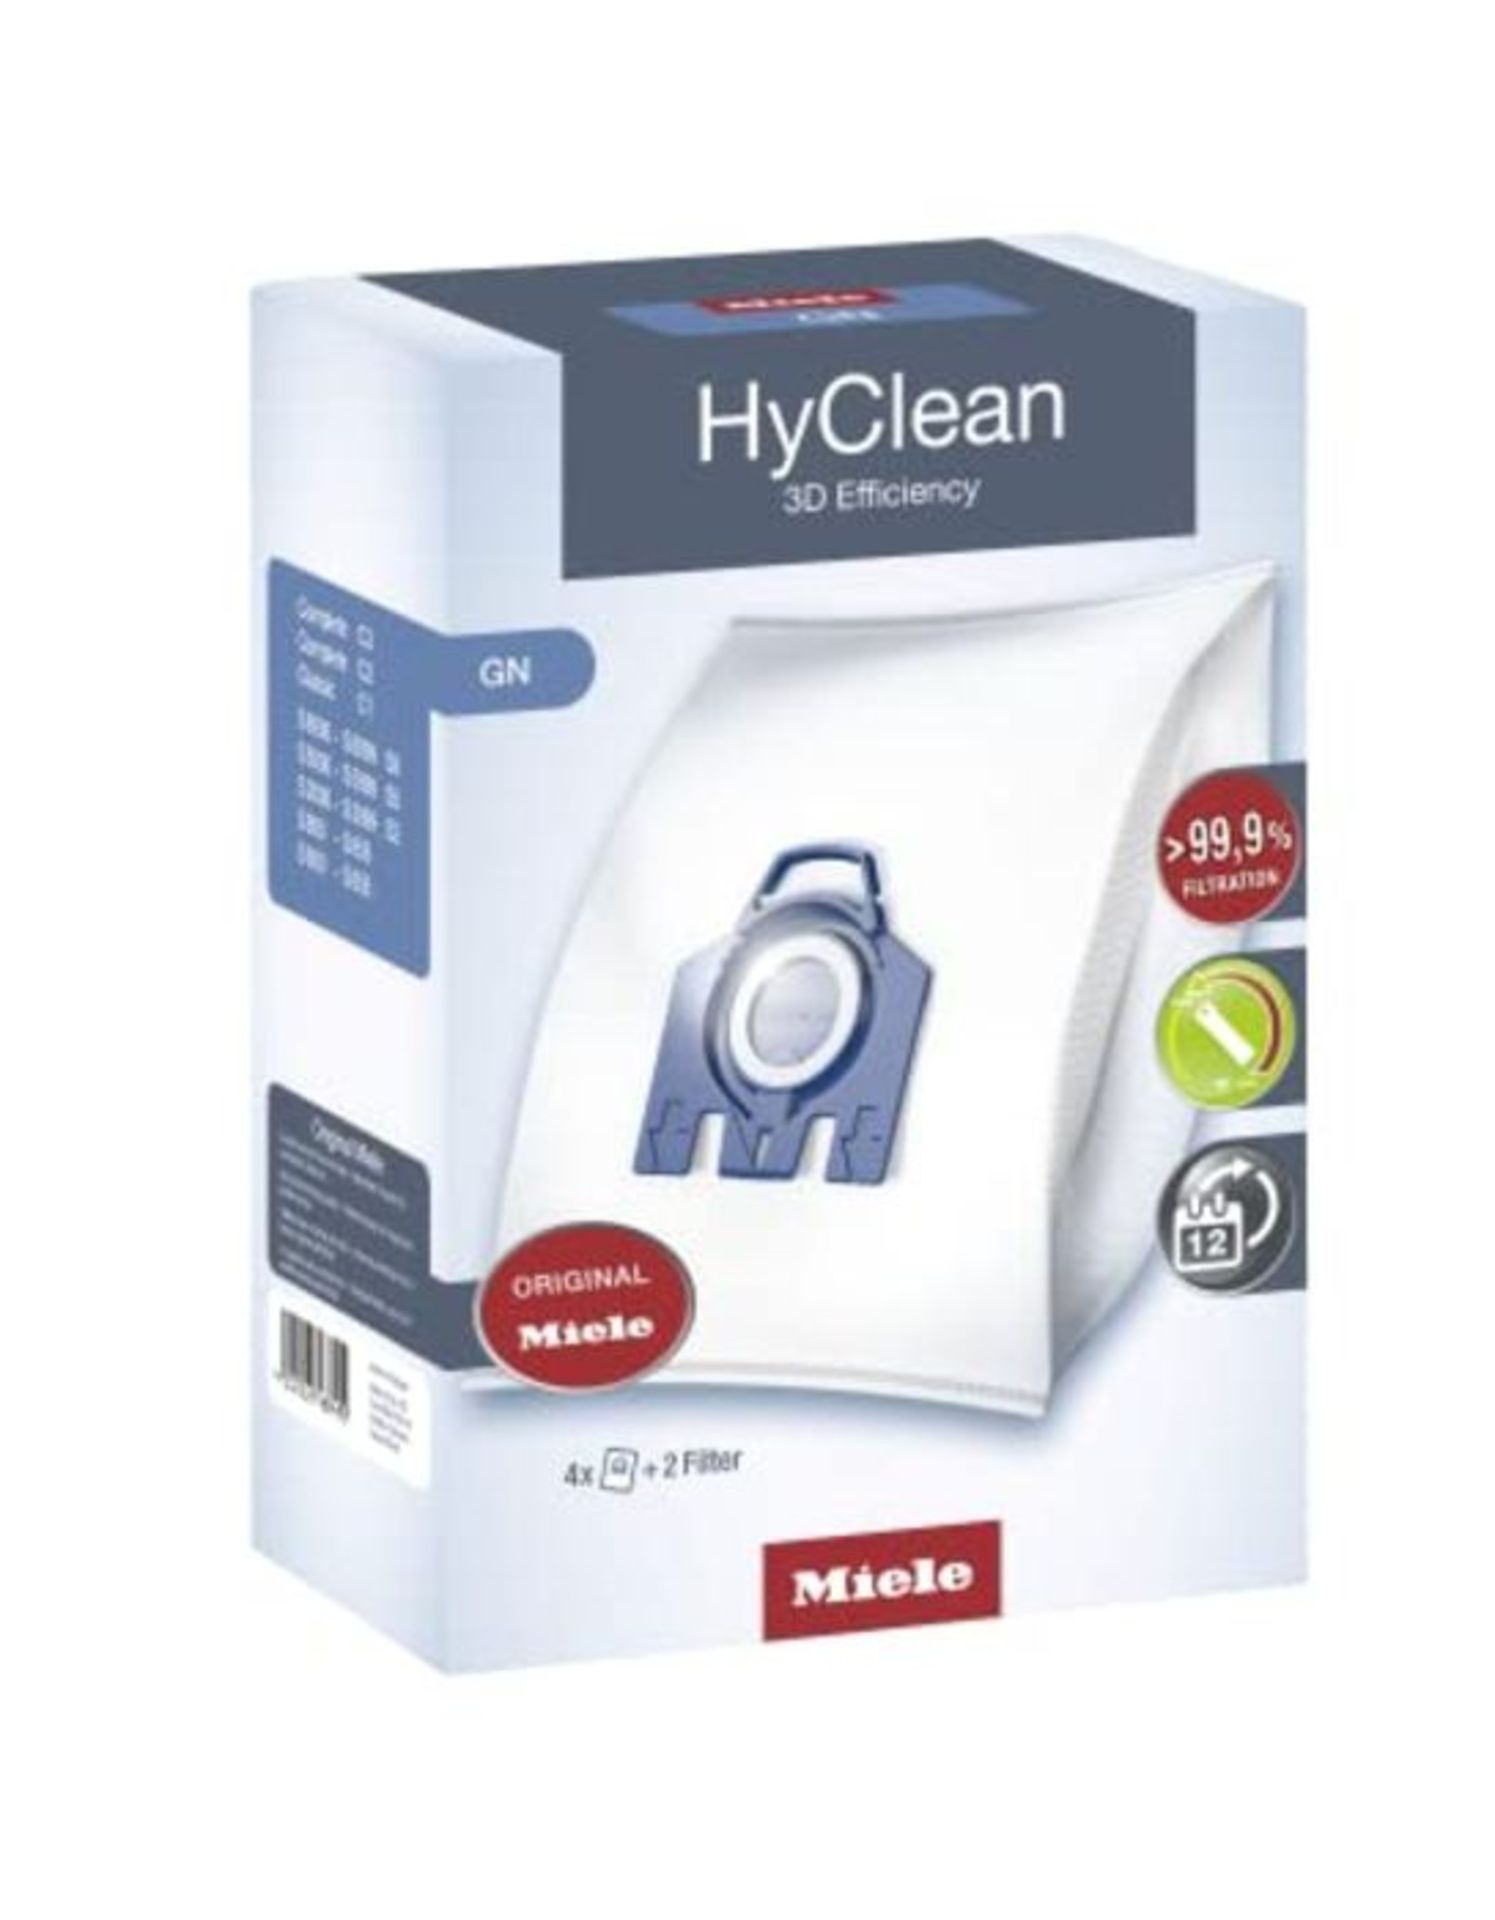 Miele 9917730 HyClean 3D Efficiency GN Vacuum Cleaner Bags for Bagged Miele Vacuum Cle